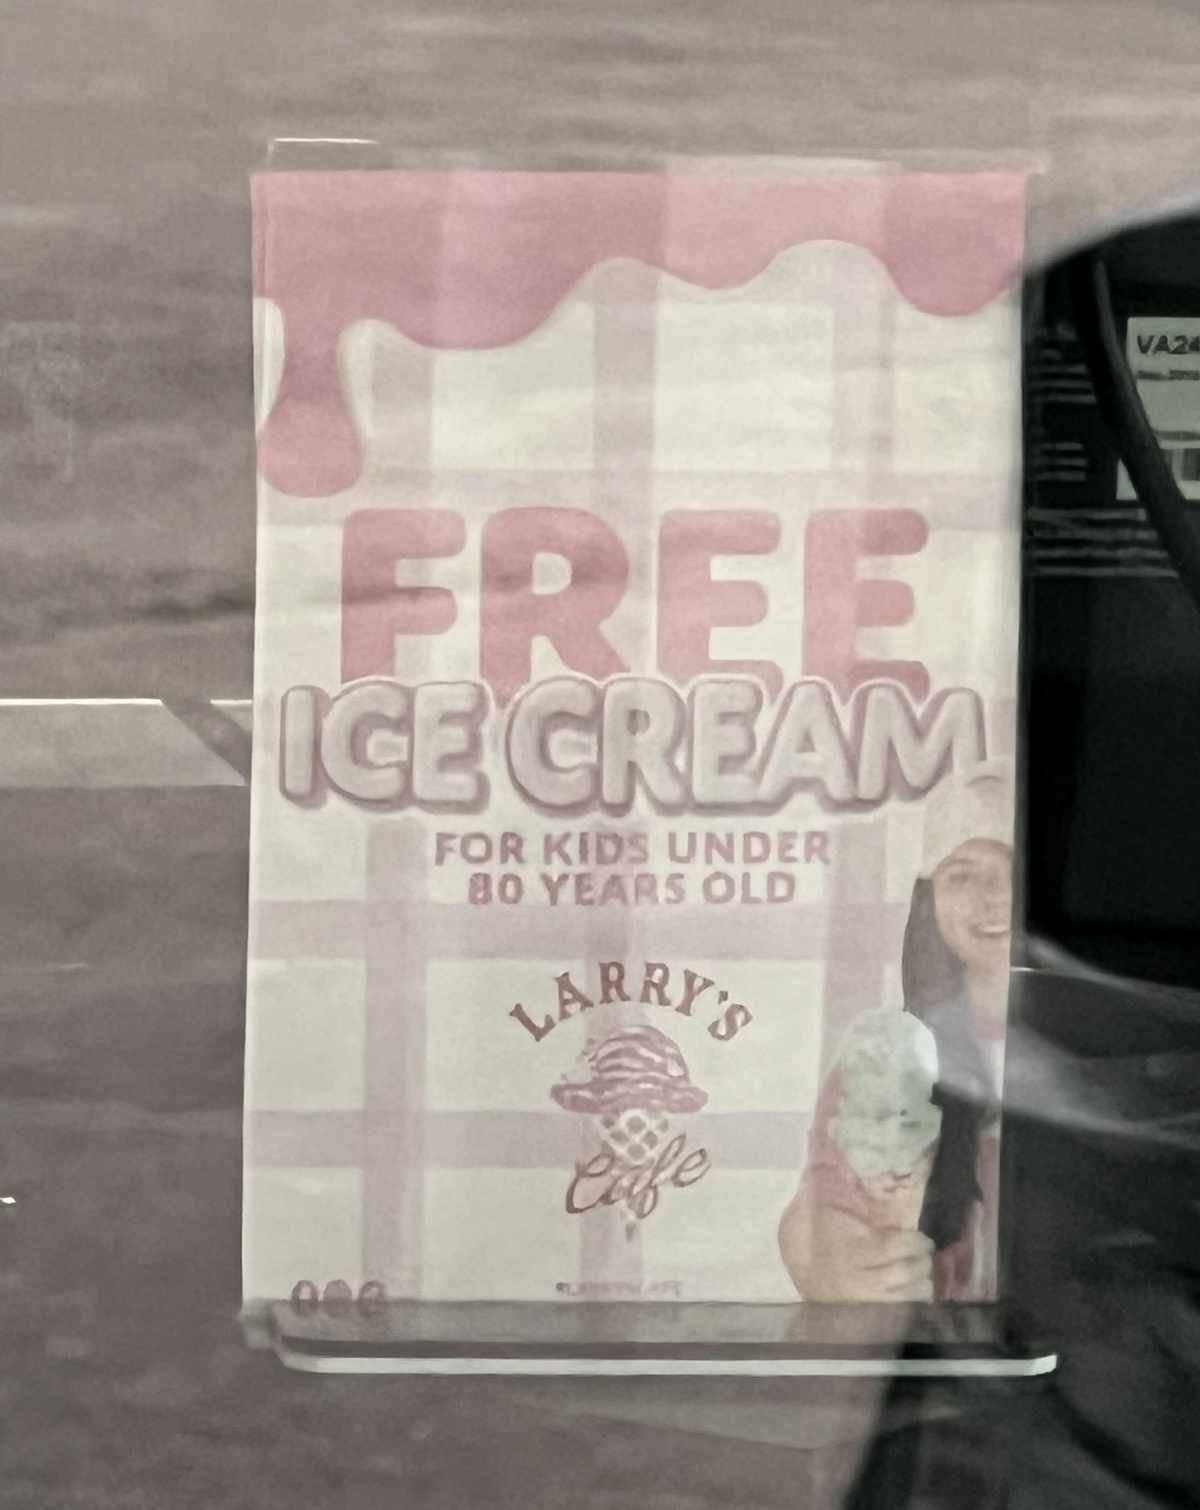 Free ice cream for kids...